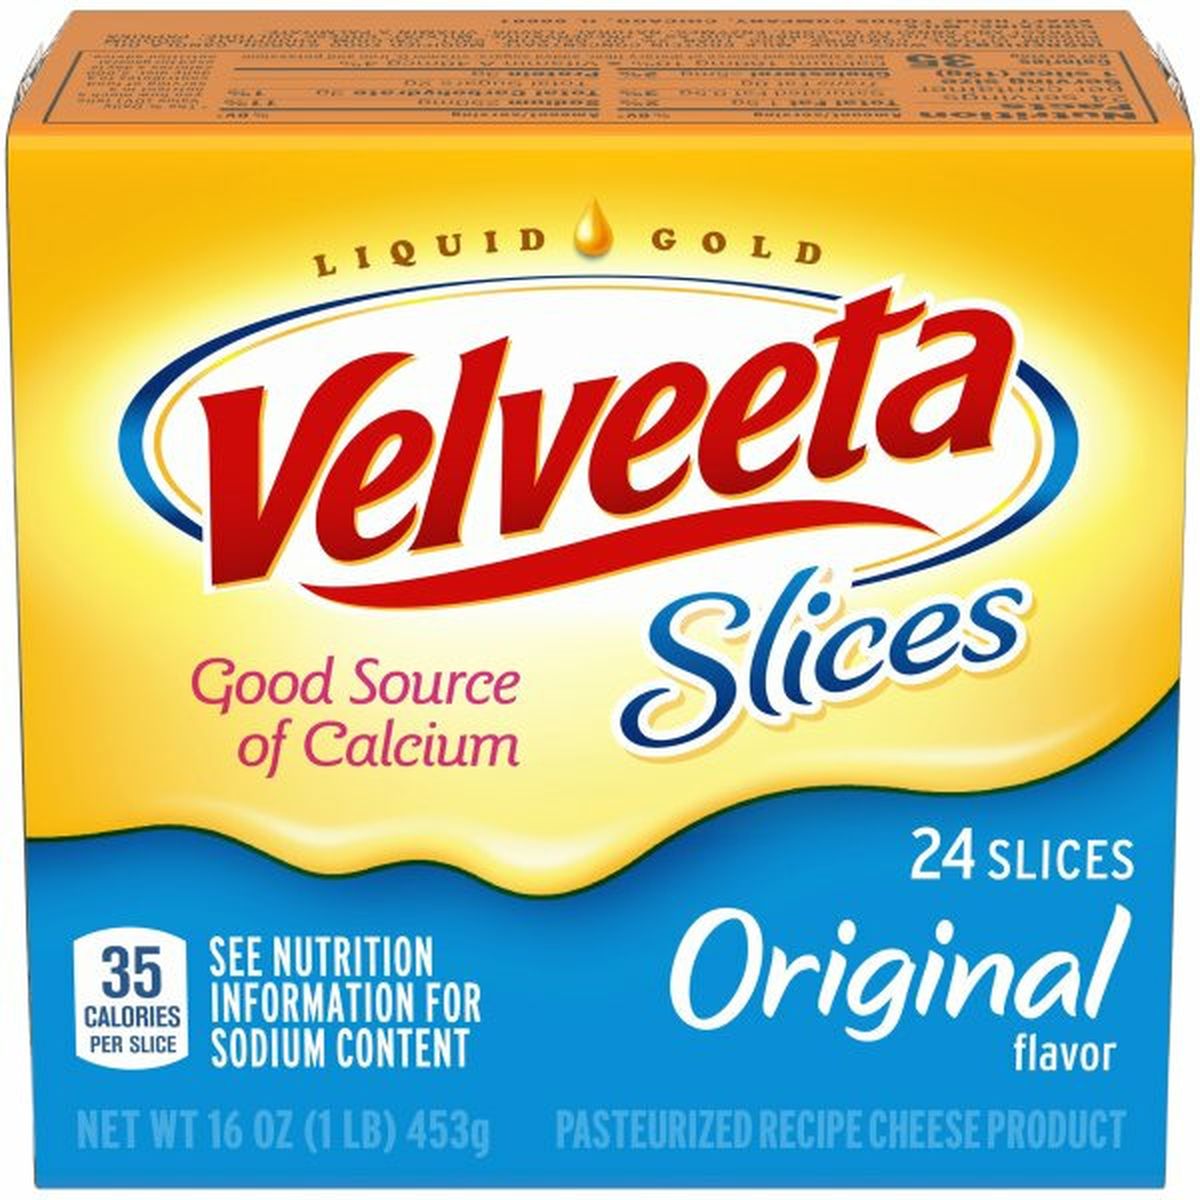 Calories in VELVEETA Original Cheese Slices